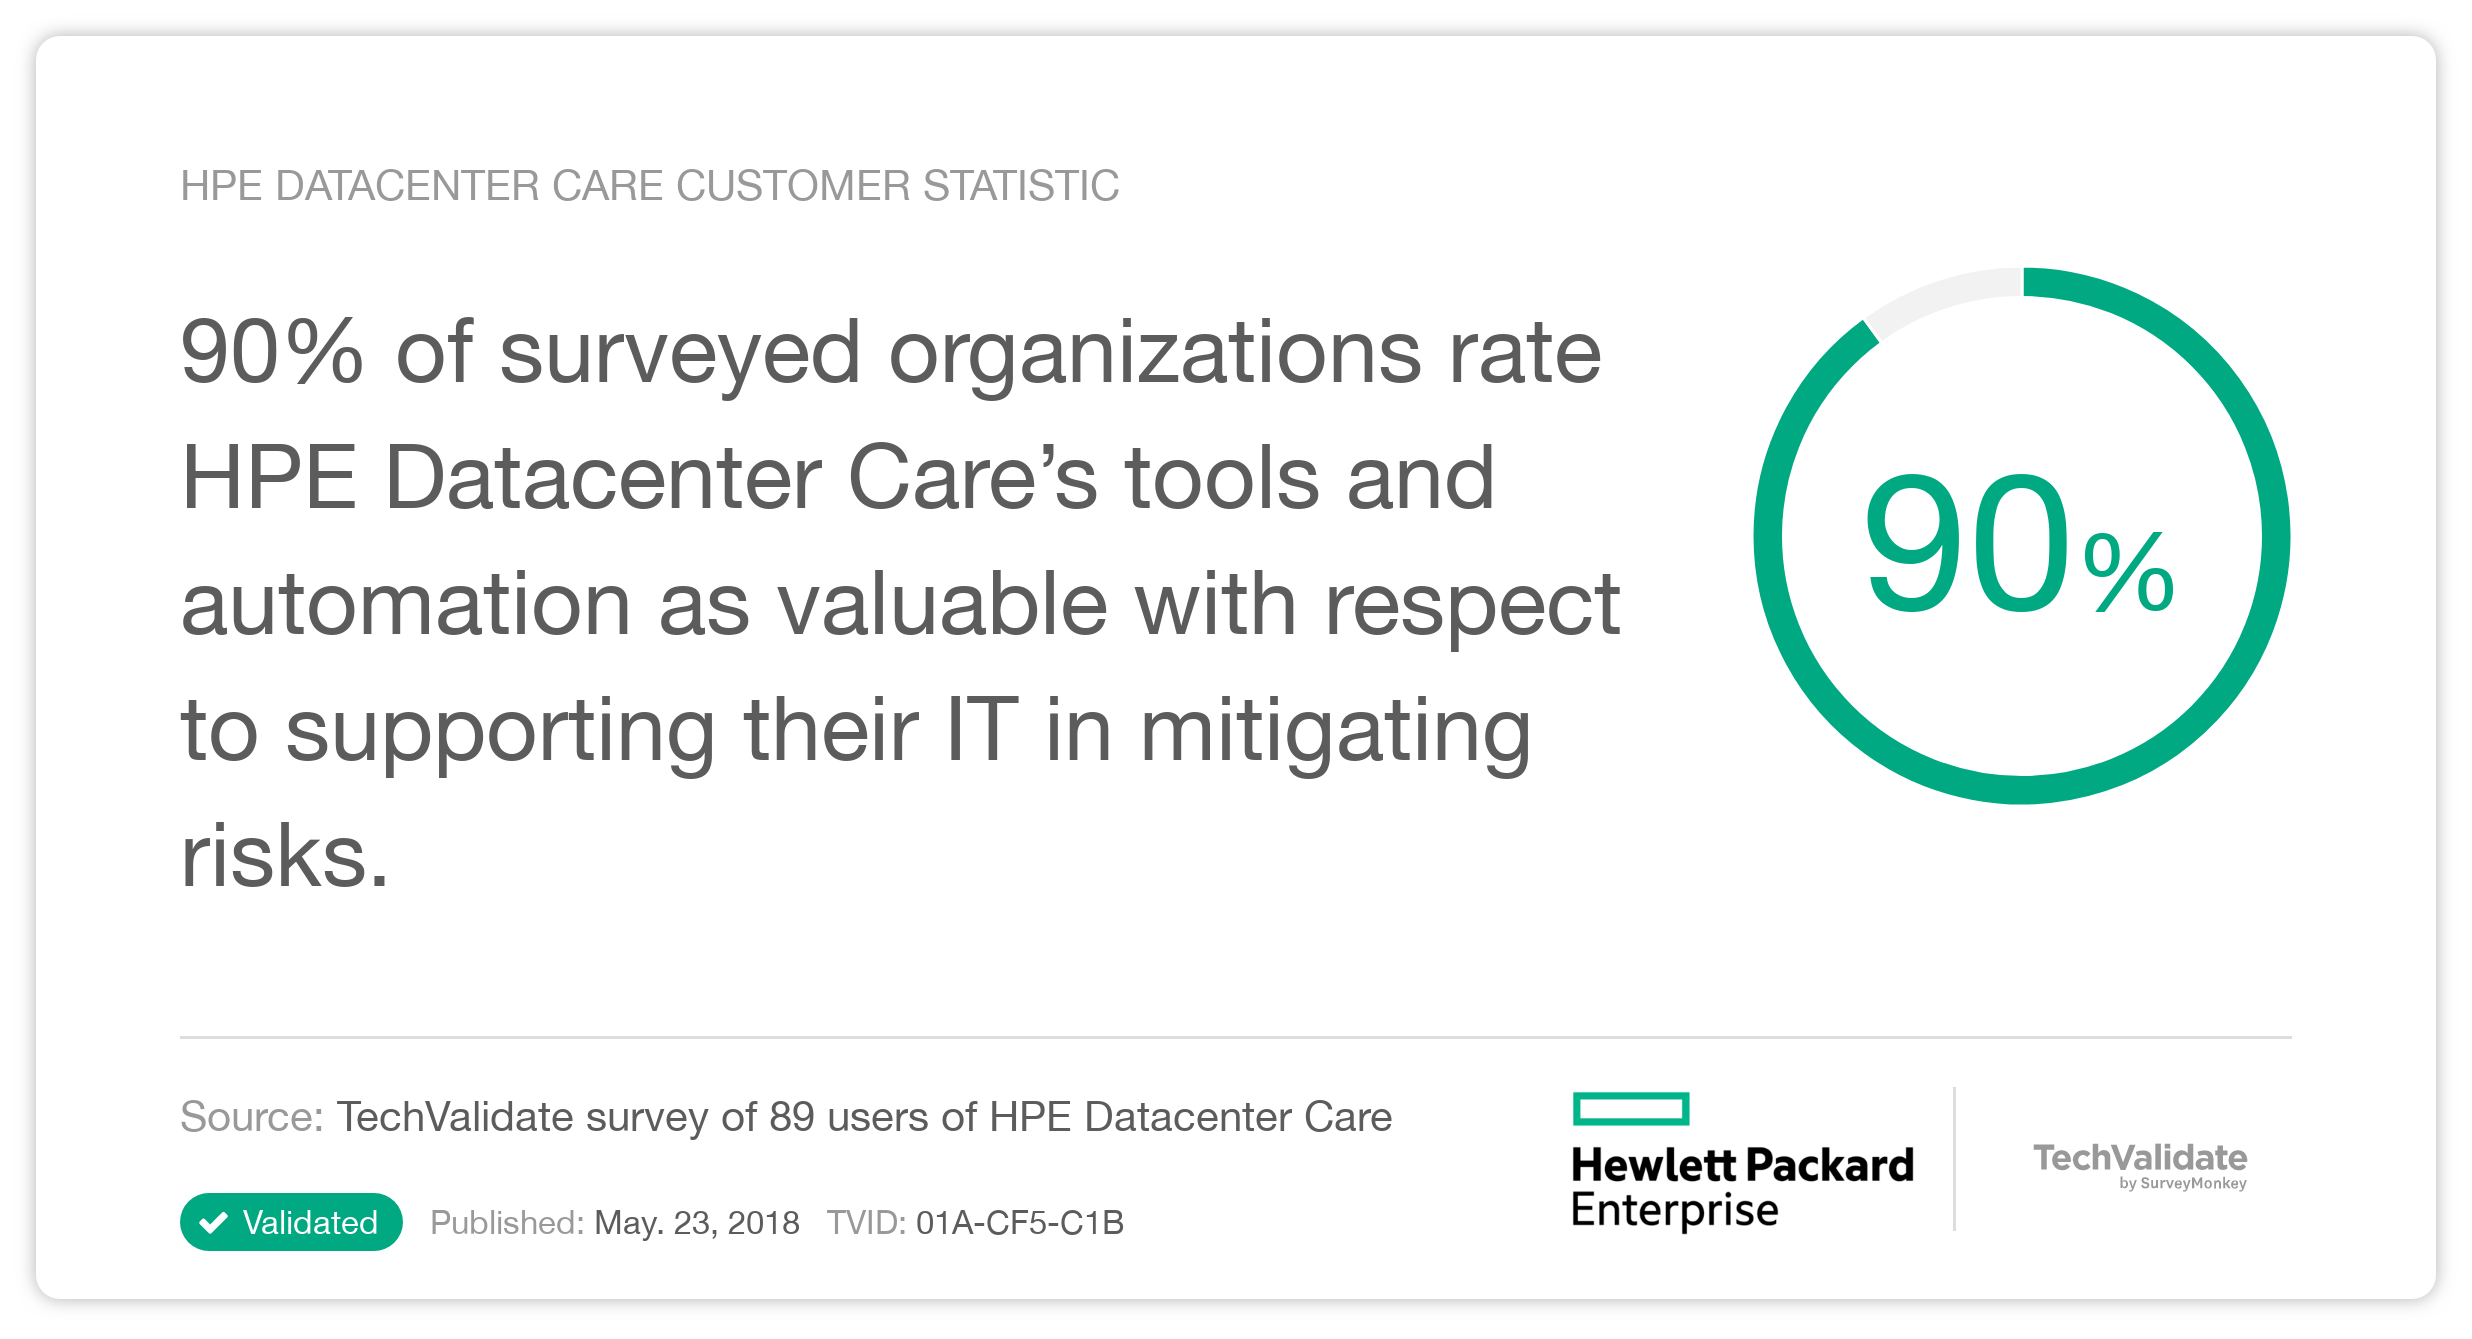 HPE Datacenter Care Customer Statistic